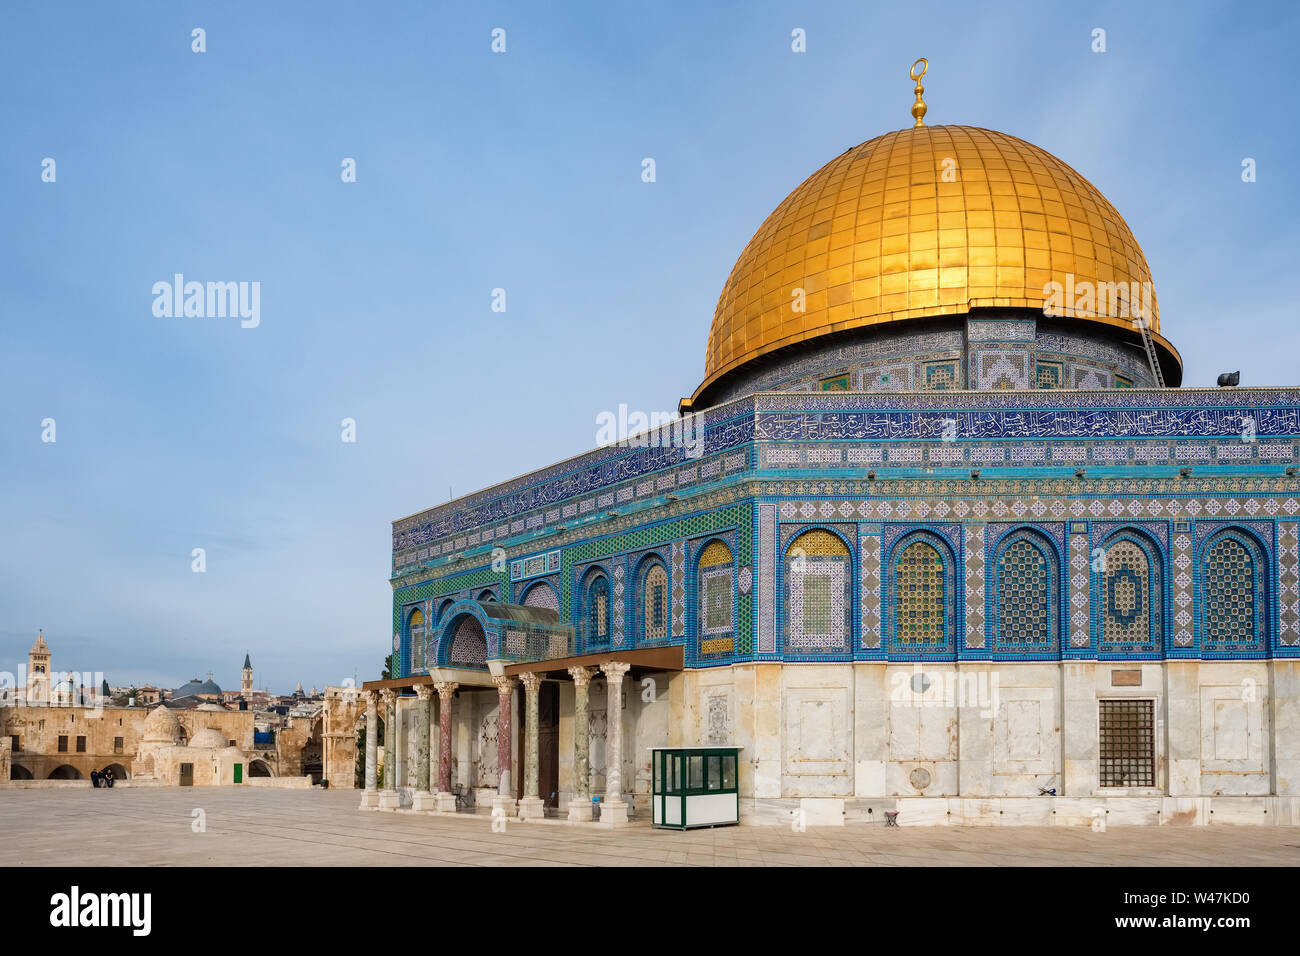 La moschea di al-Aqsa o Cupola della roccia a Gerusalemme, Israele. Vista da vicino Foto Stock